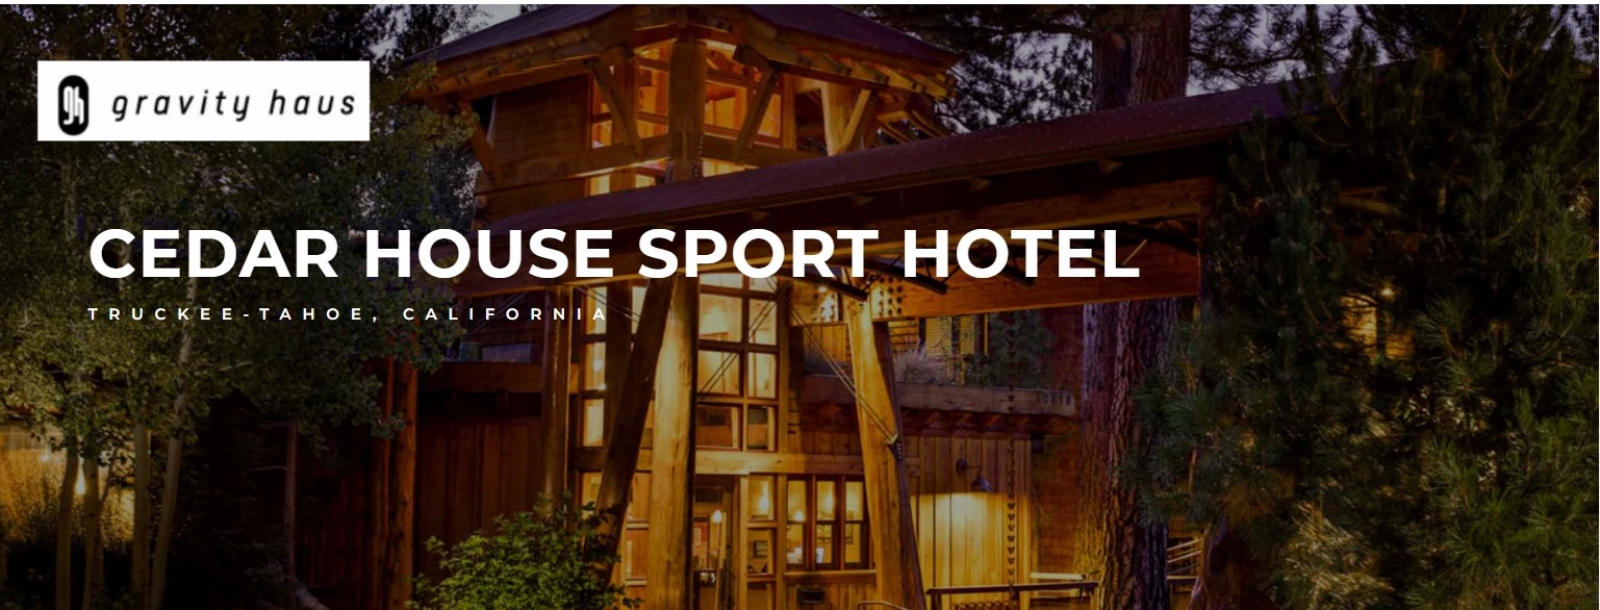 Gravity Haus Purchases Award-Winning Cedar House Sport Hotel